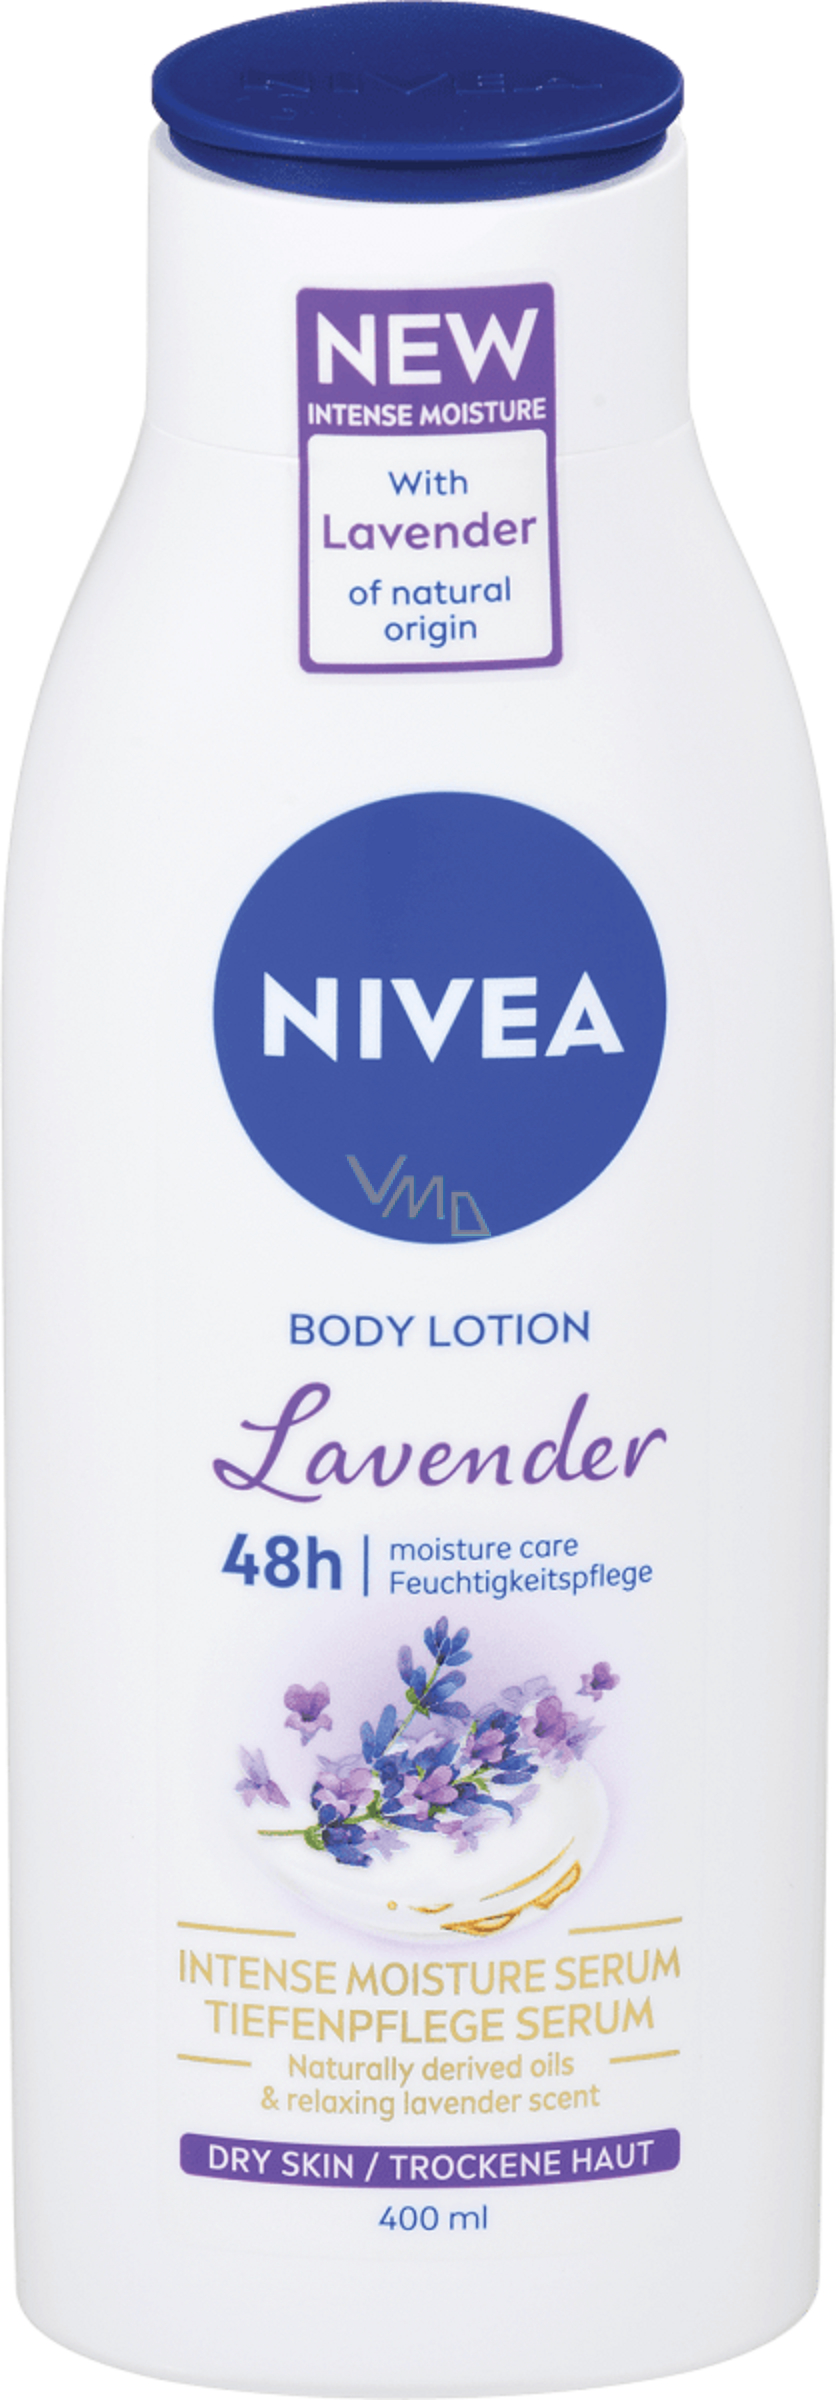 kød Bøje varm Nivea Lavender body lotion for dry skin 400 ml - VMD parfumerie - drogerie